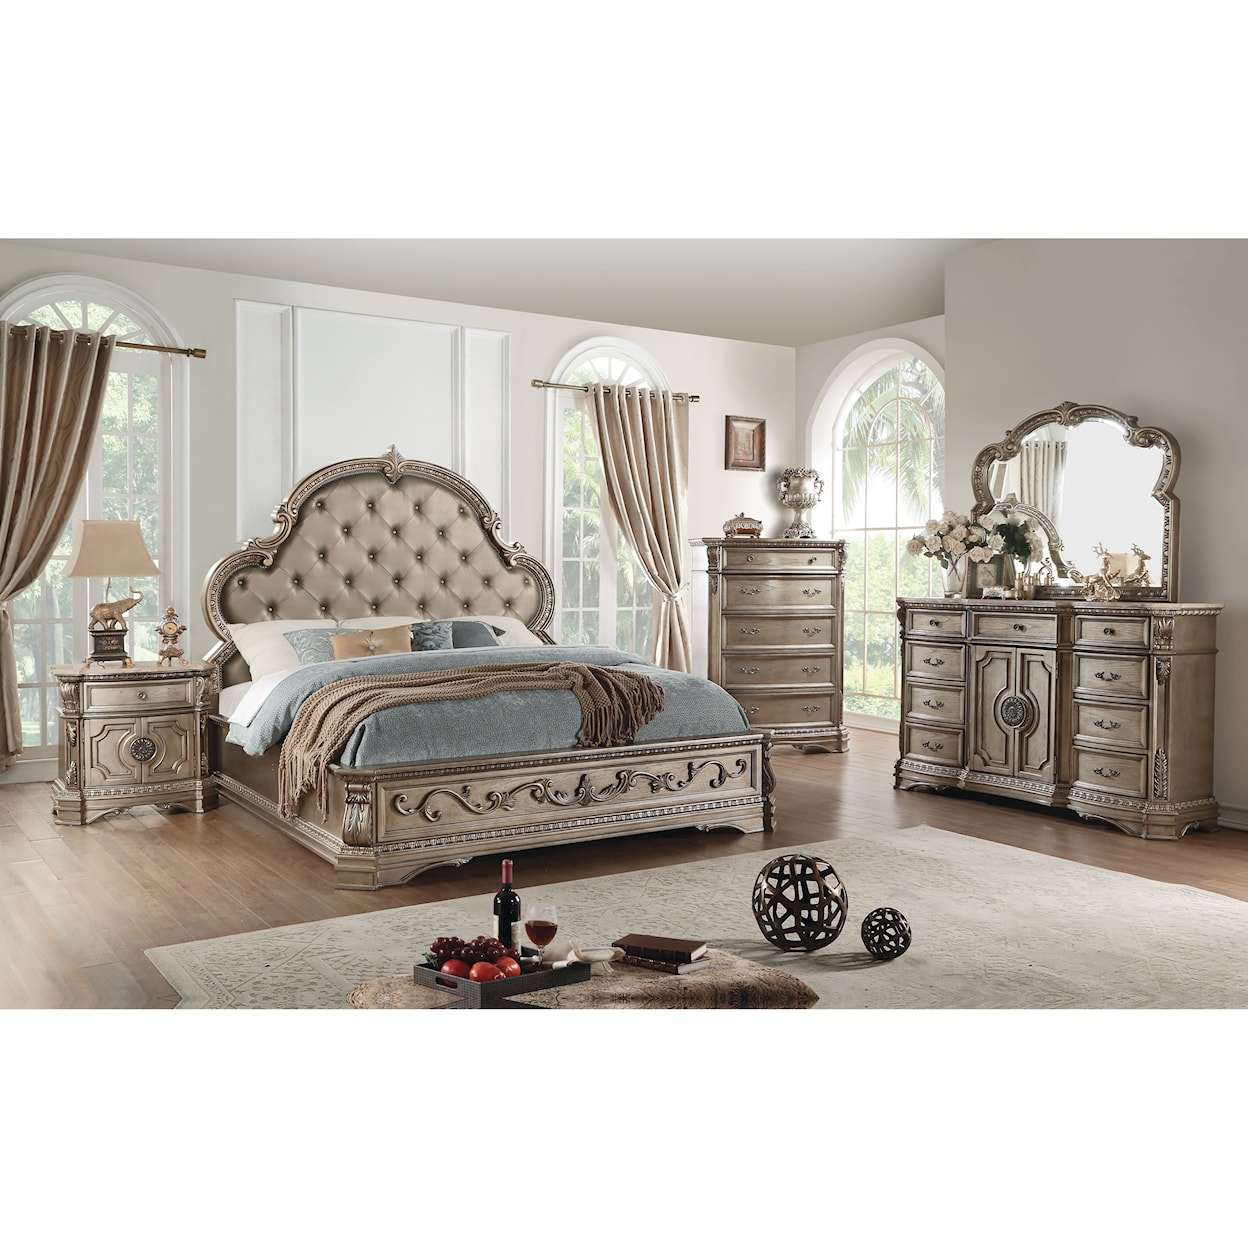 Acme Furniture Northville Queen Bedroom Group